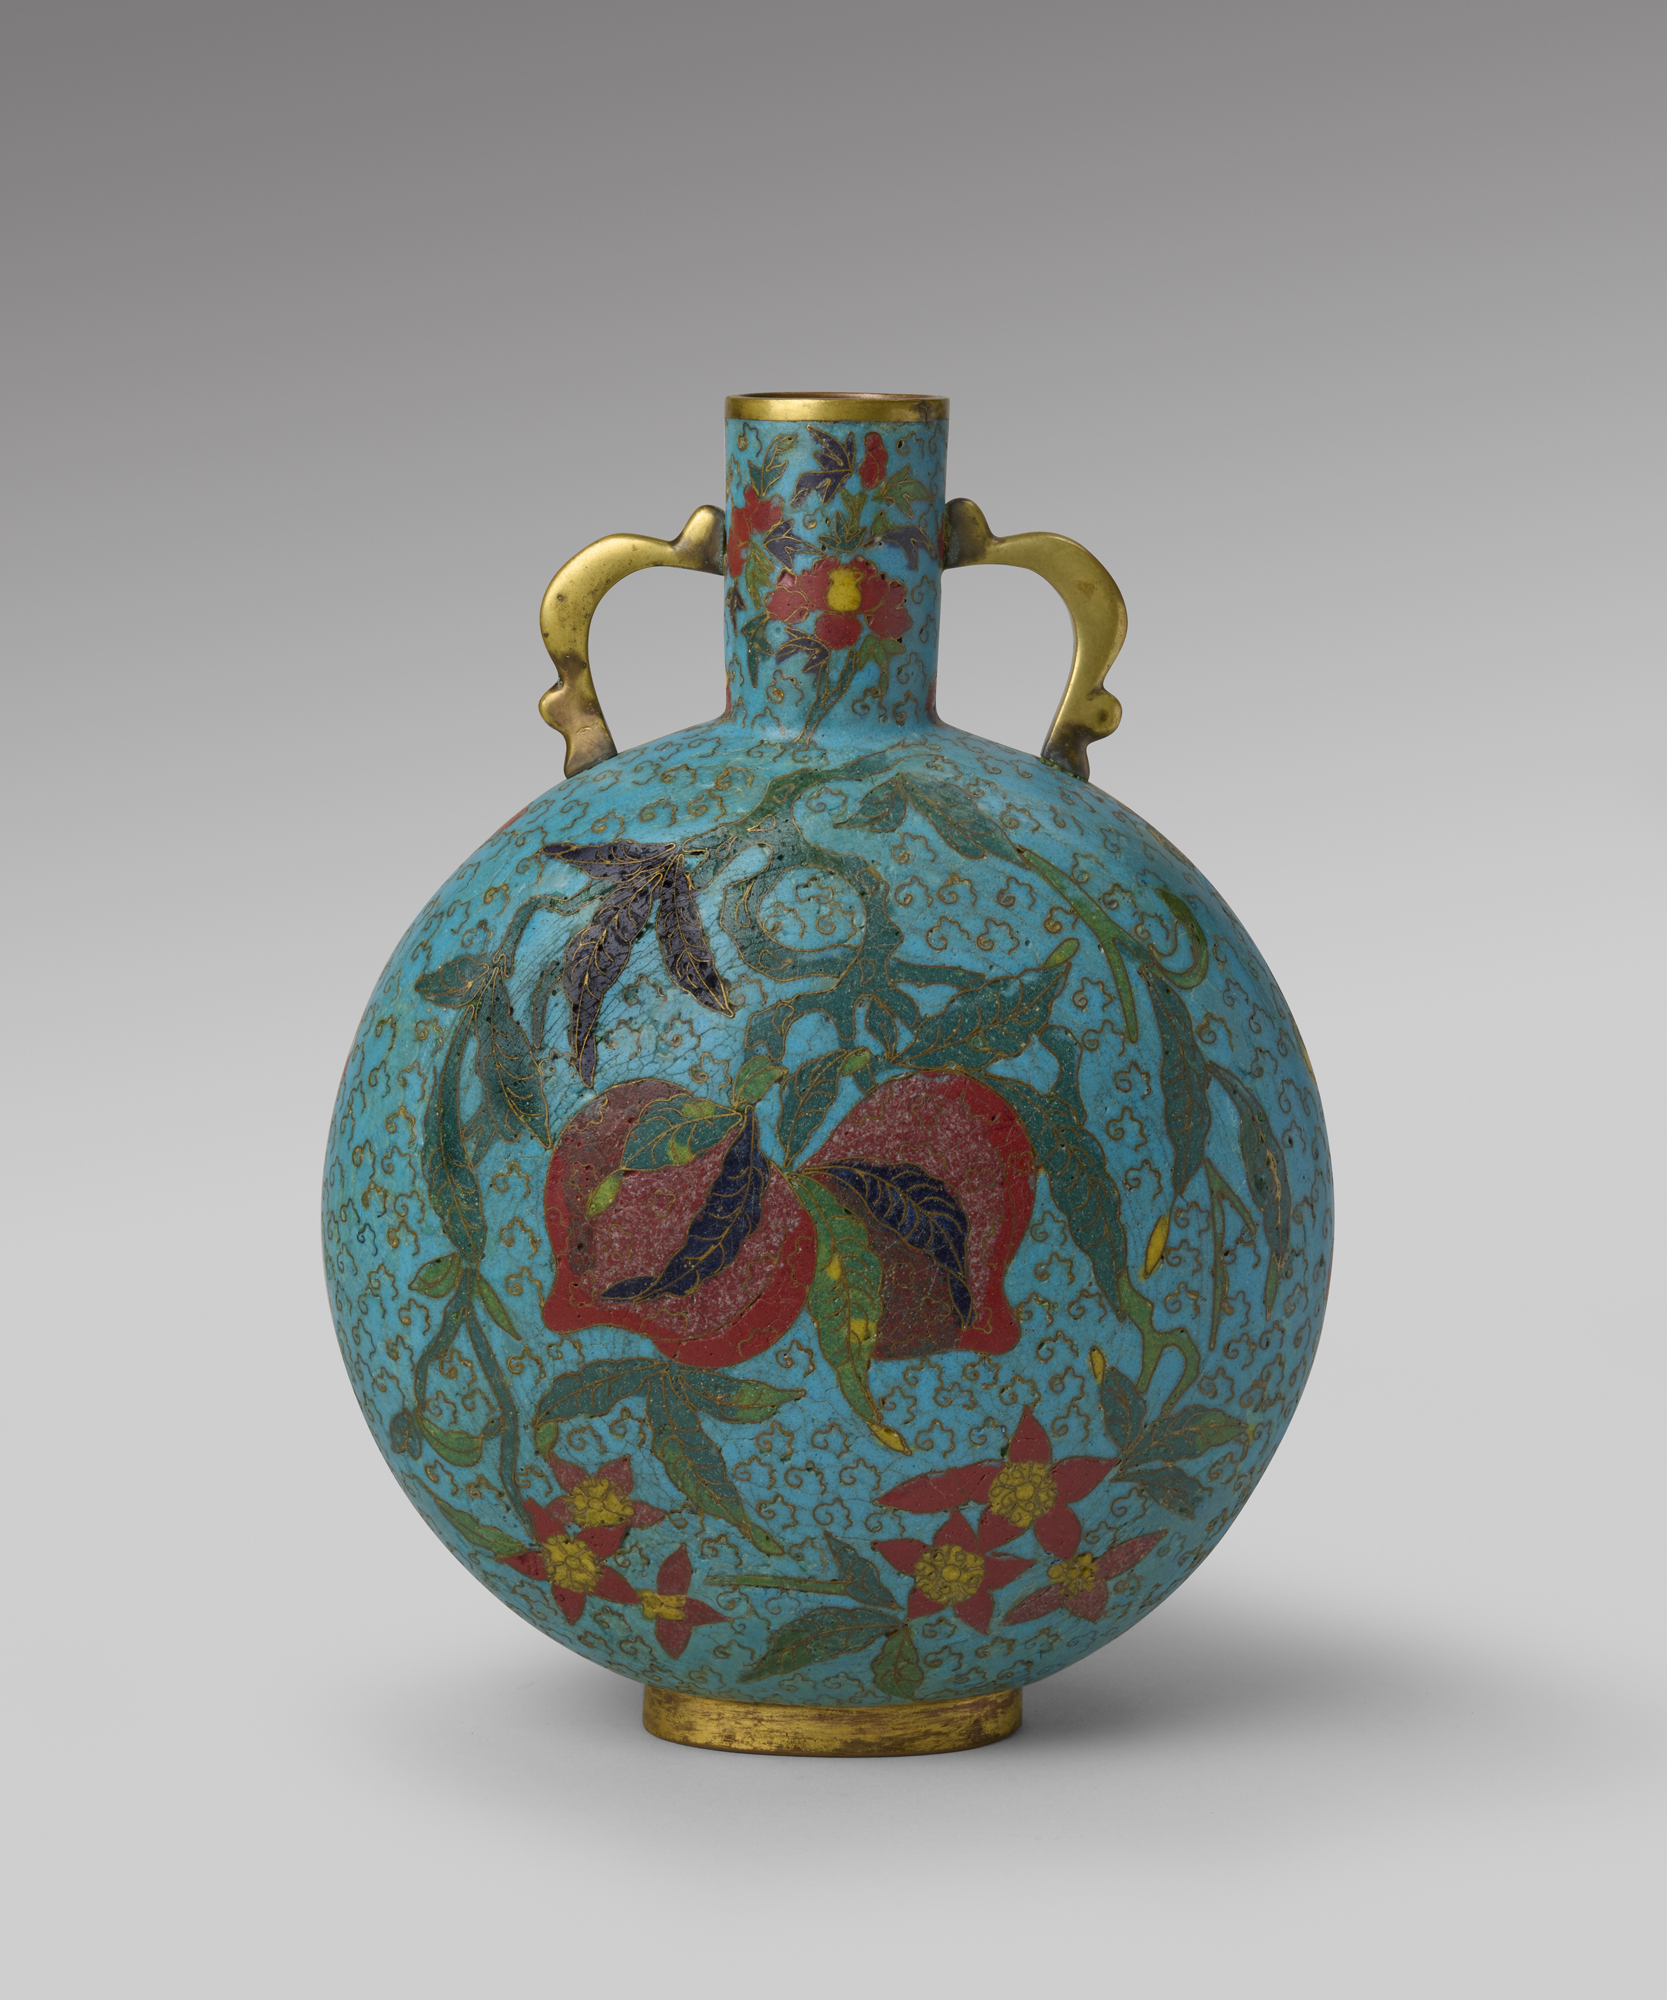 A rare cloisonne enamel garlic-head twin-handled vase (Qianlong period, 1736-1795)